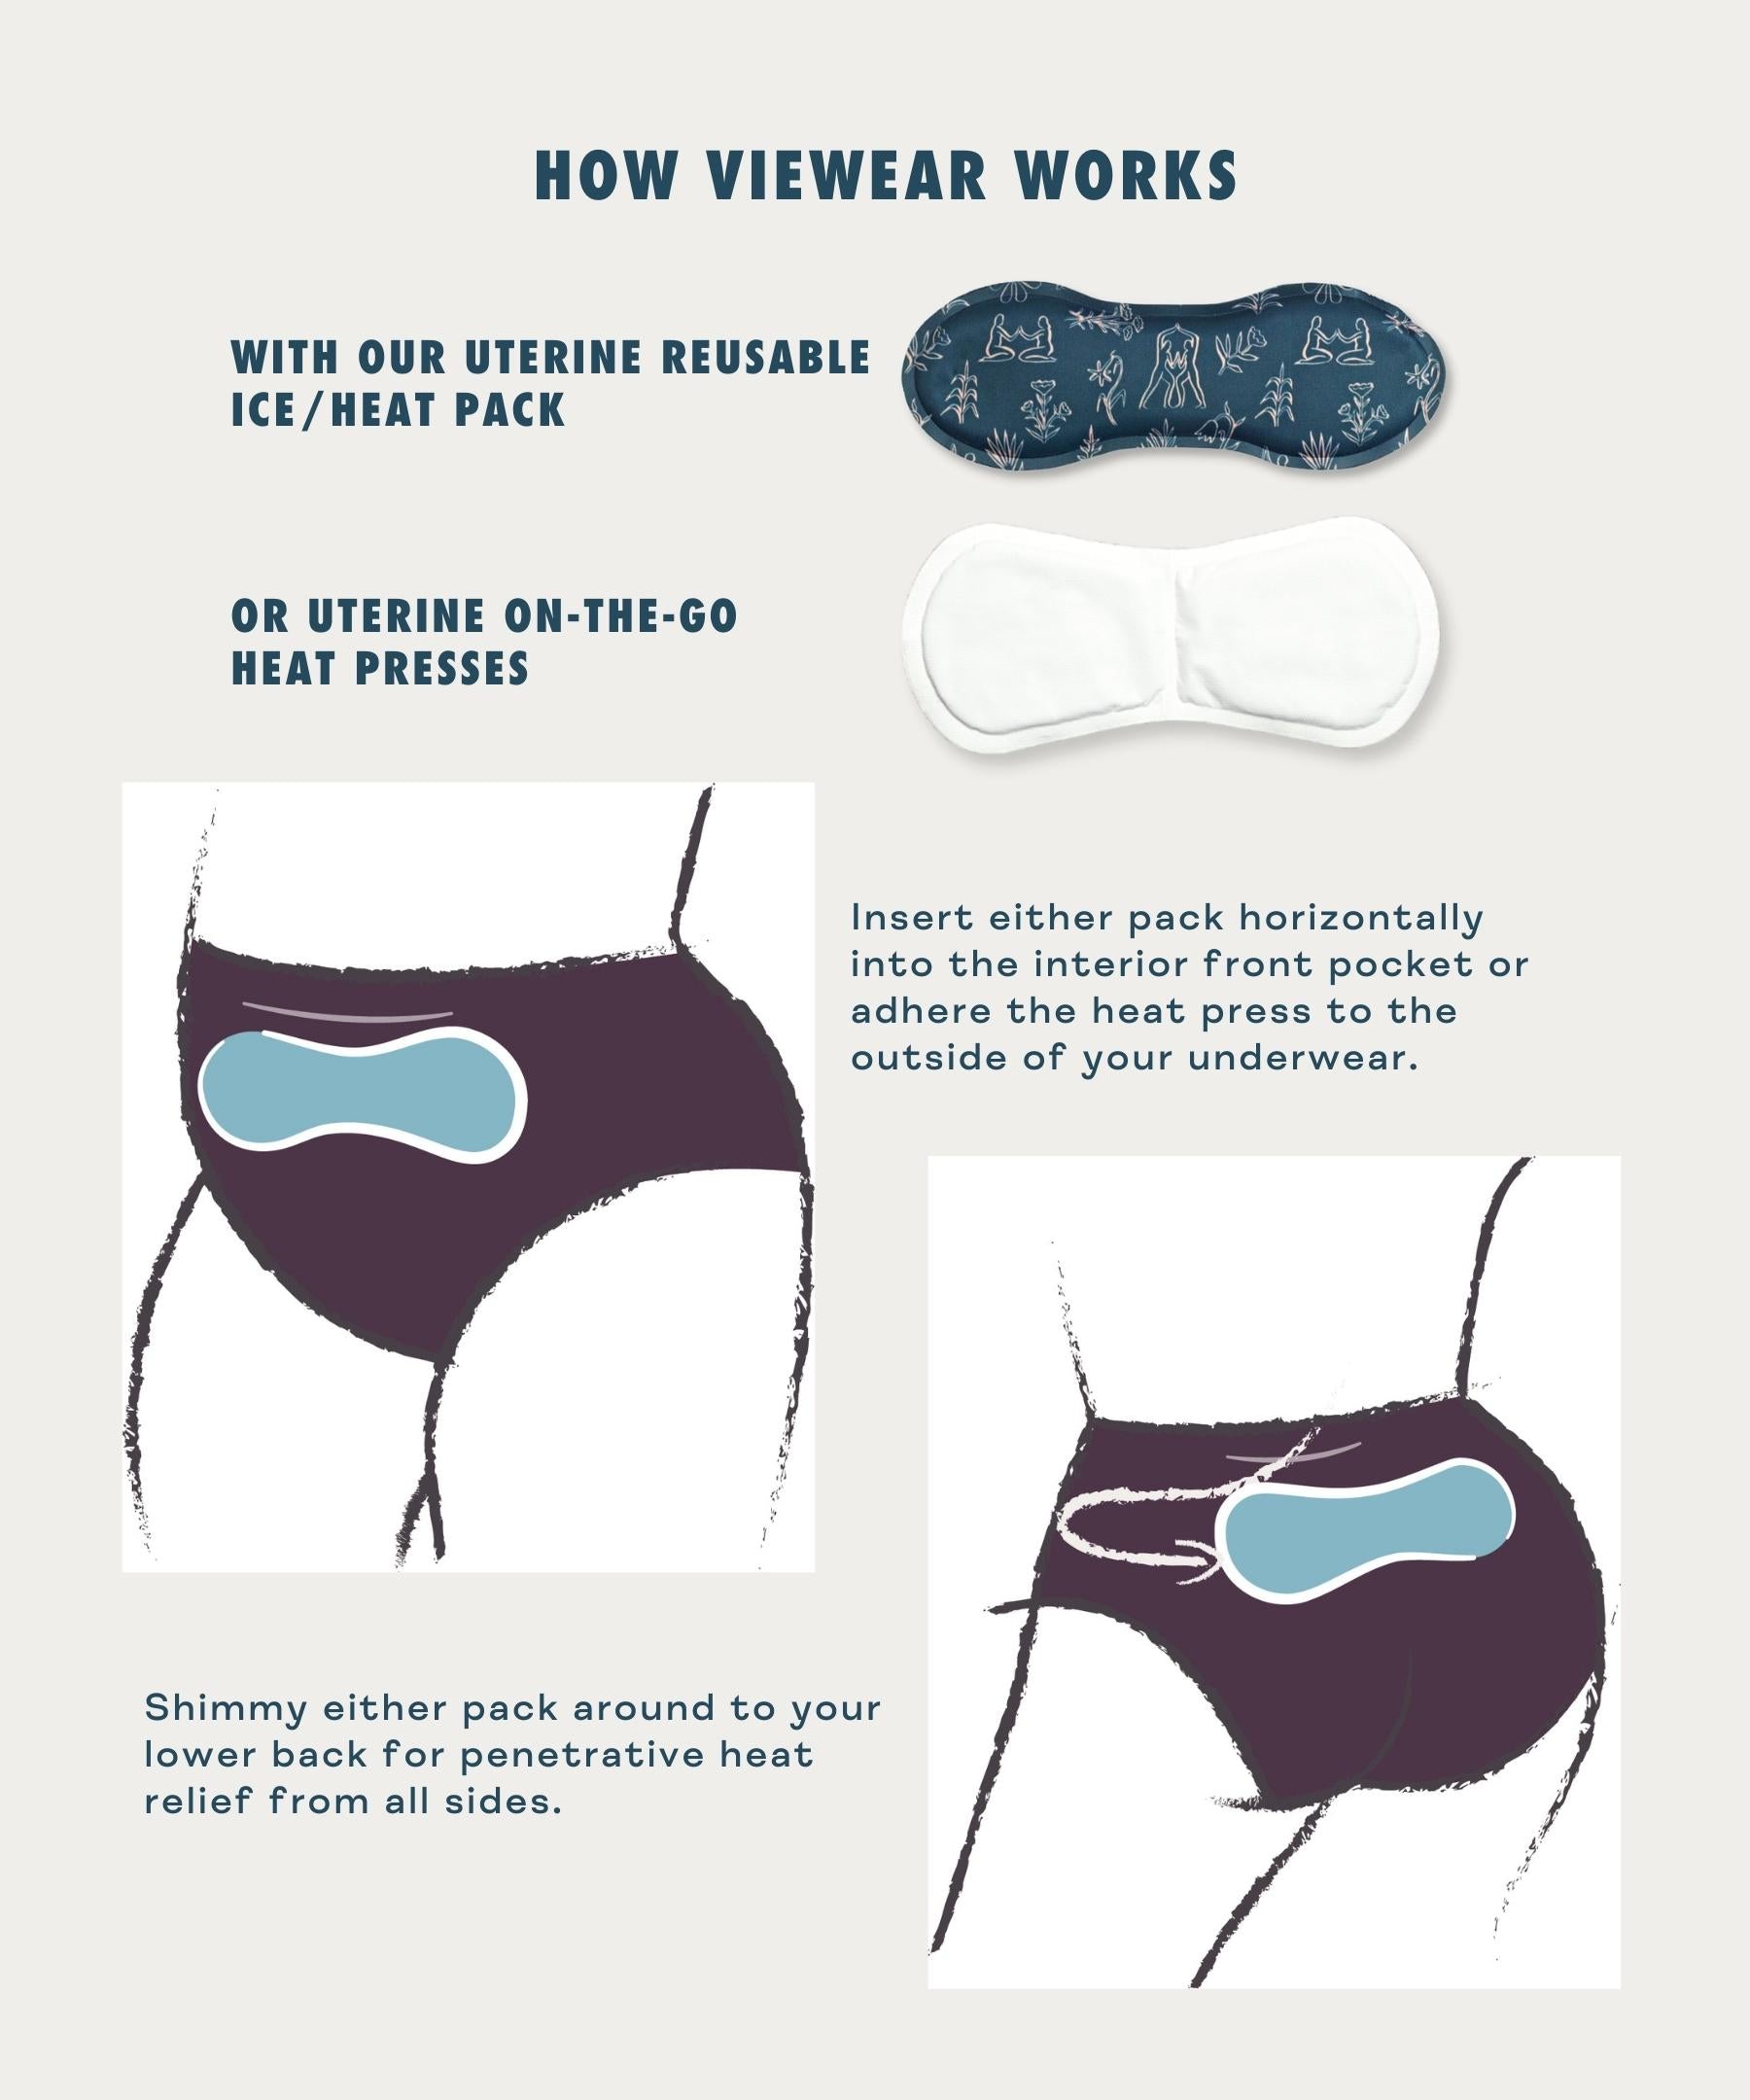 Adult panties health underwear reusable portable